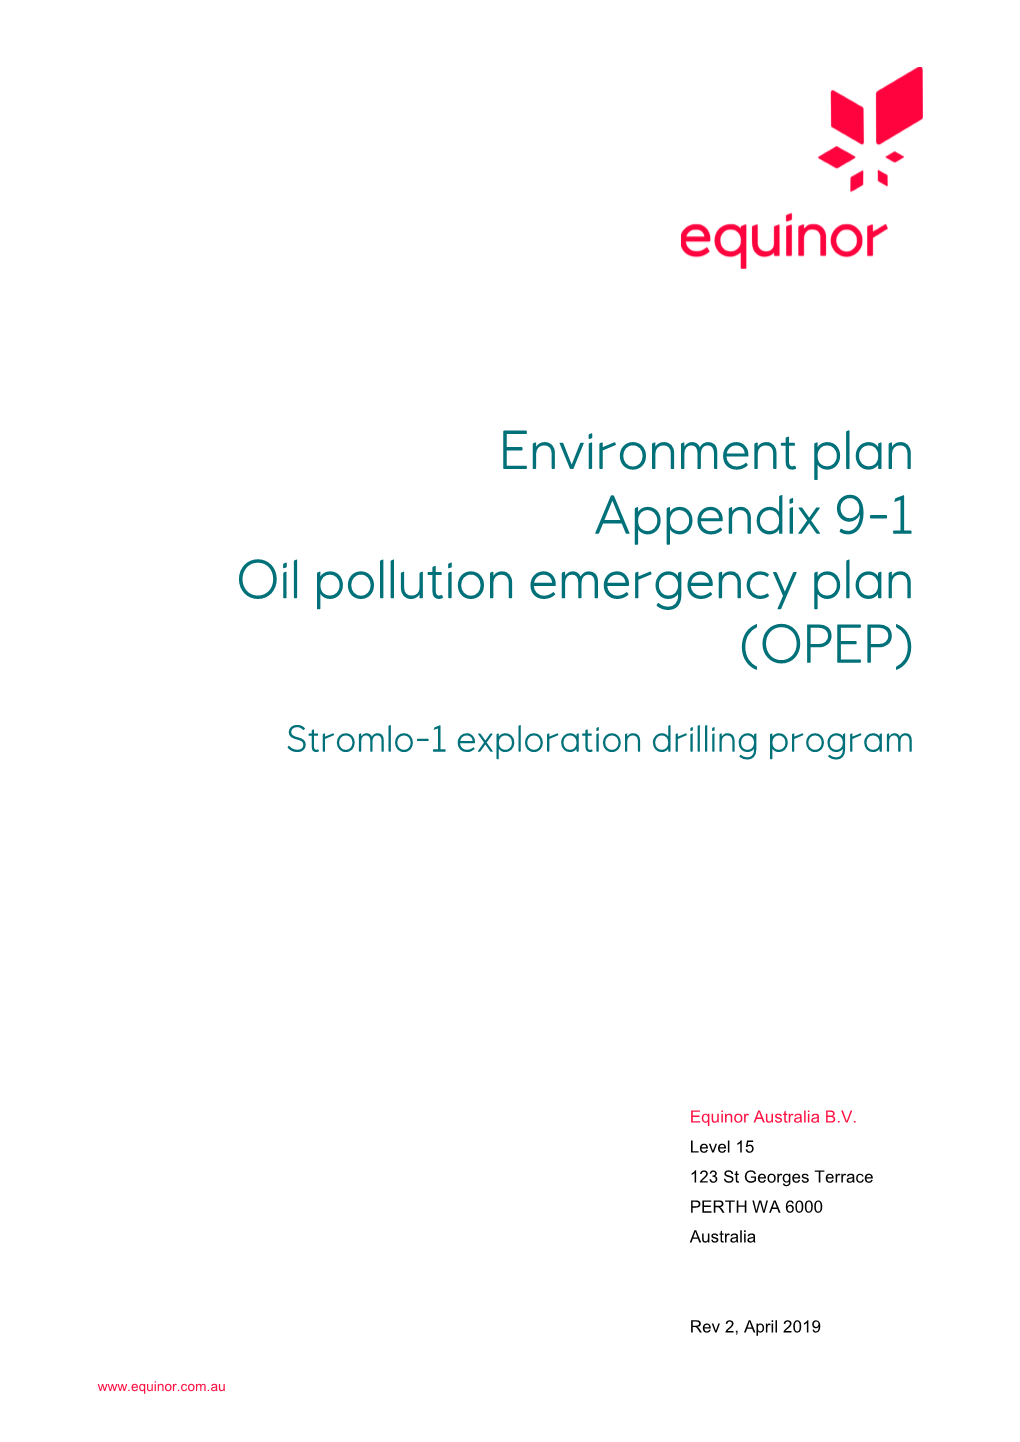 Environment Plan Appendix 9-1 Oil Pollution Emergency Plan (OPEP)